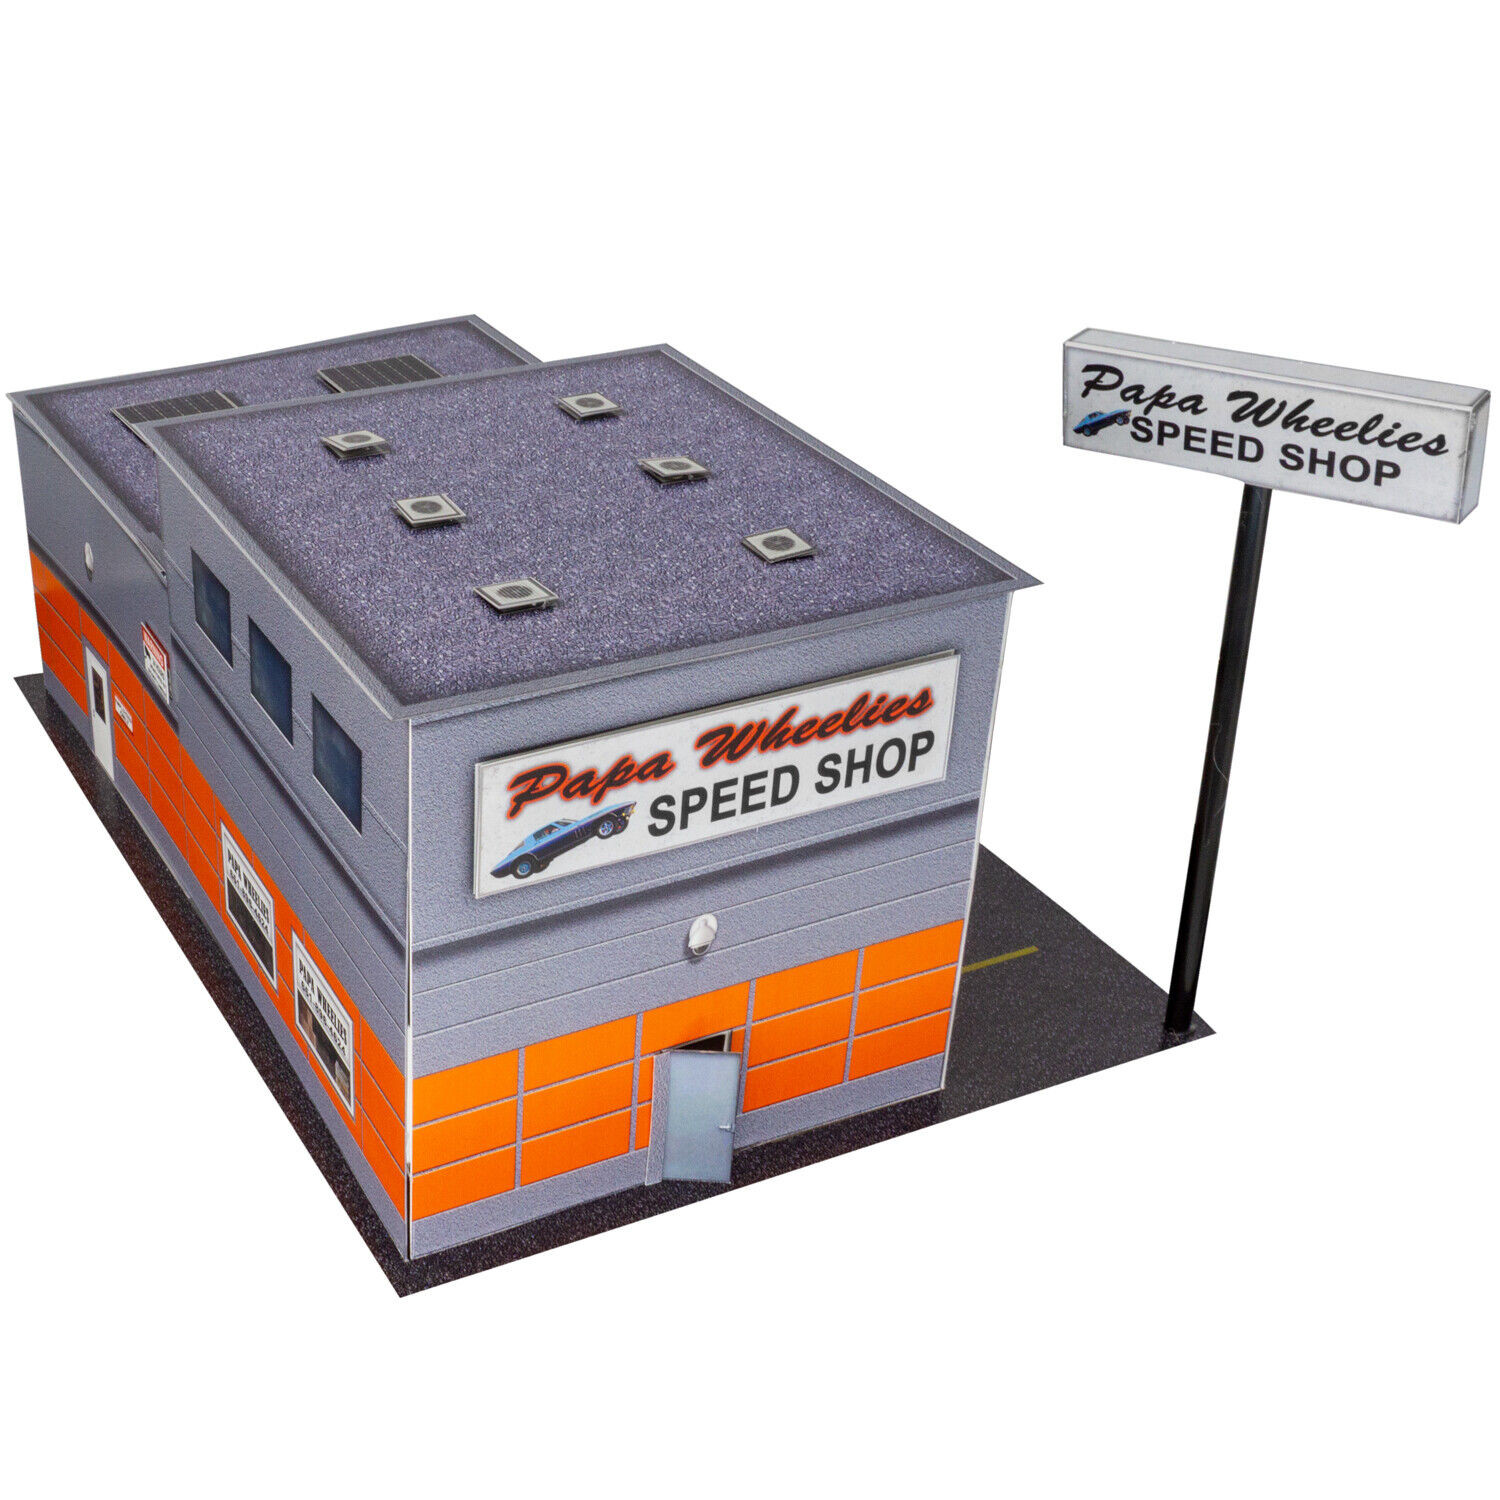 BK 6451 1:64 Scale "Papa Wheelies Speed Shop" Photo Real Scale Building Kit